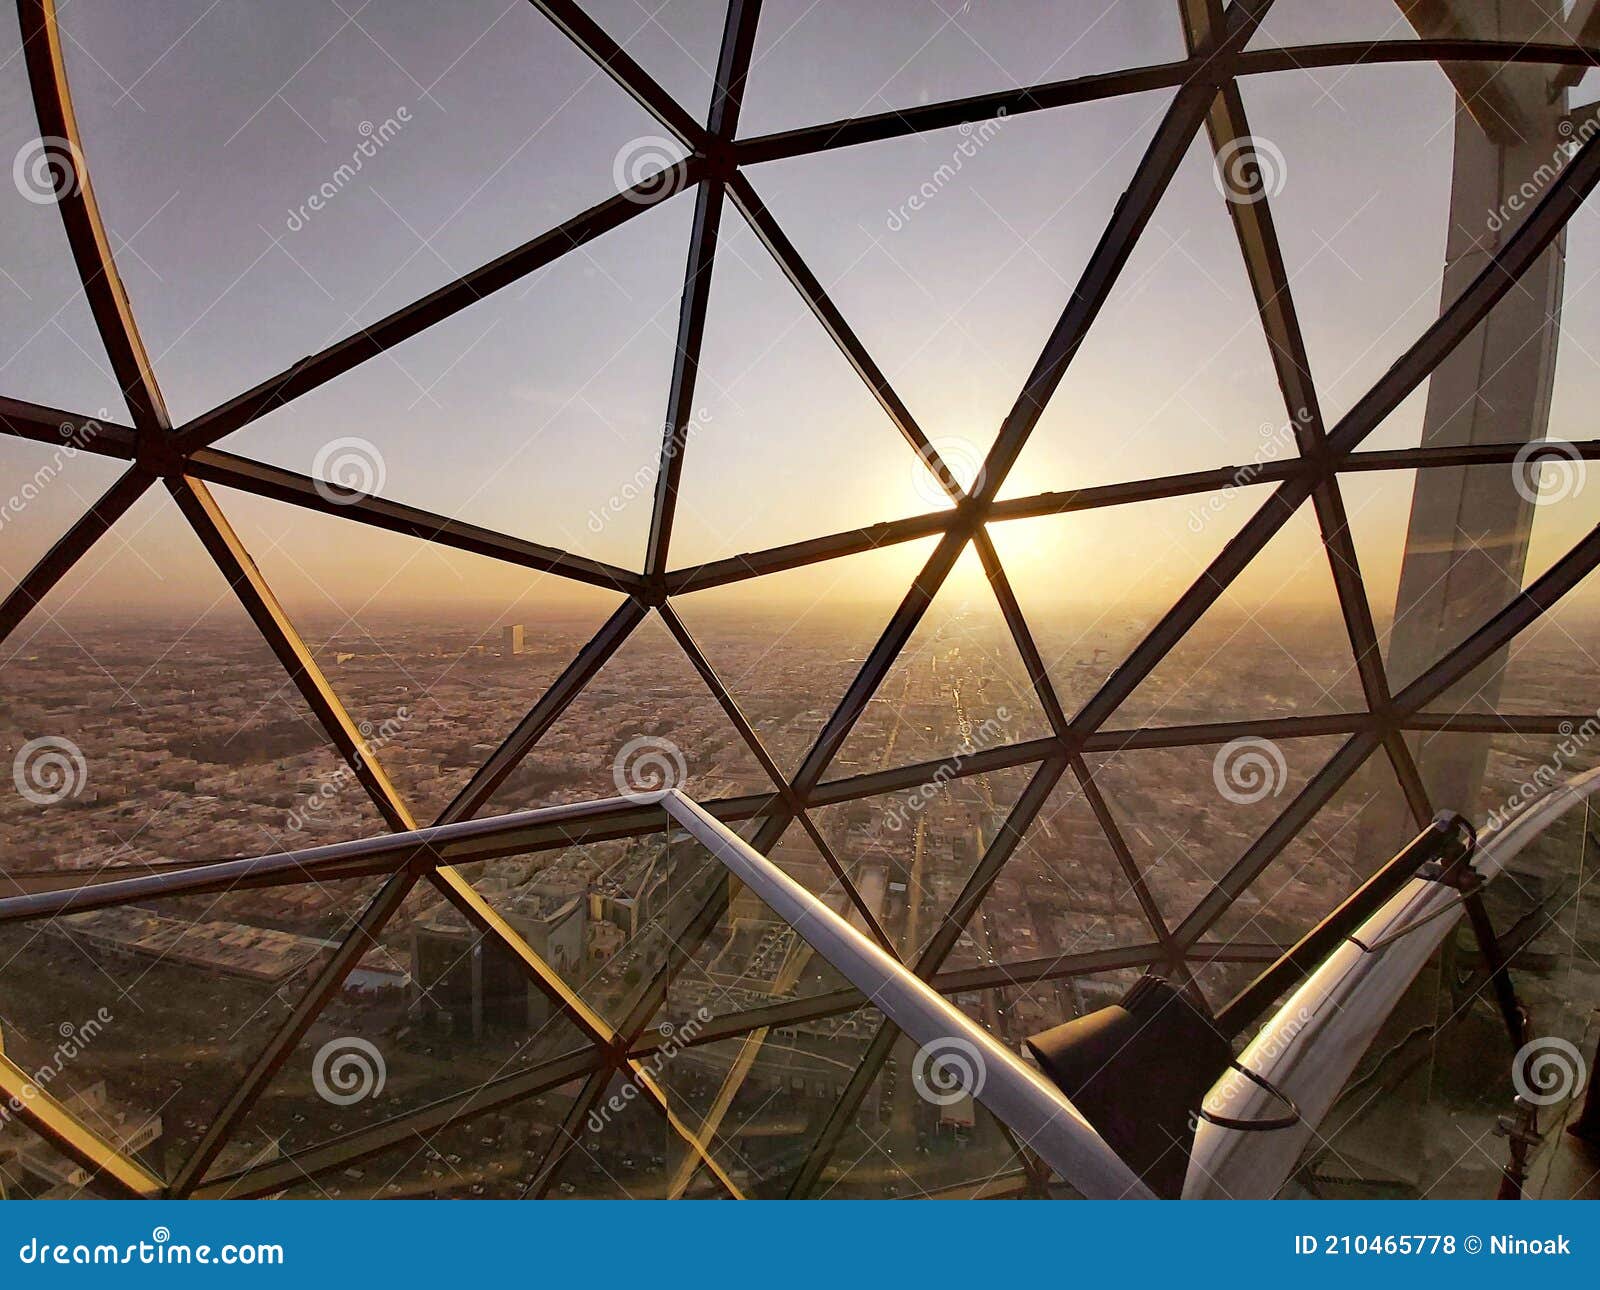 view from al faisaliah tower on riyadh's sunset